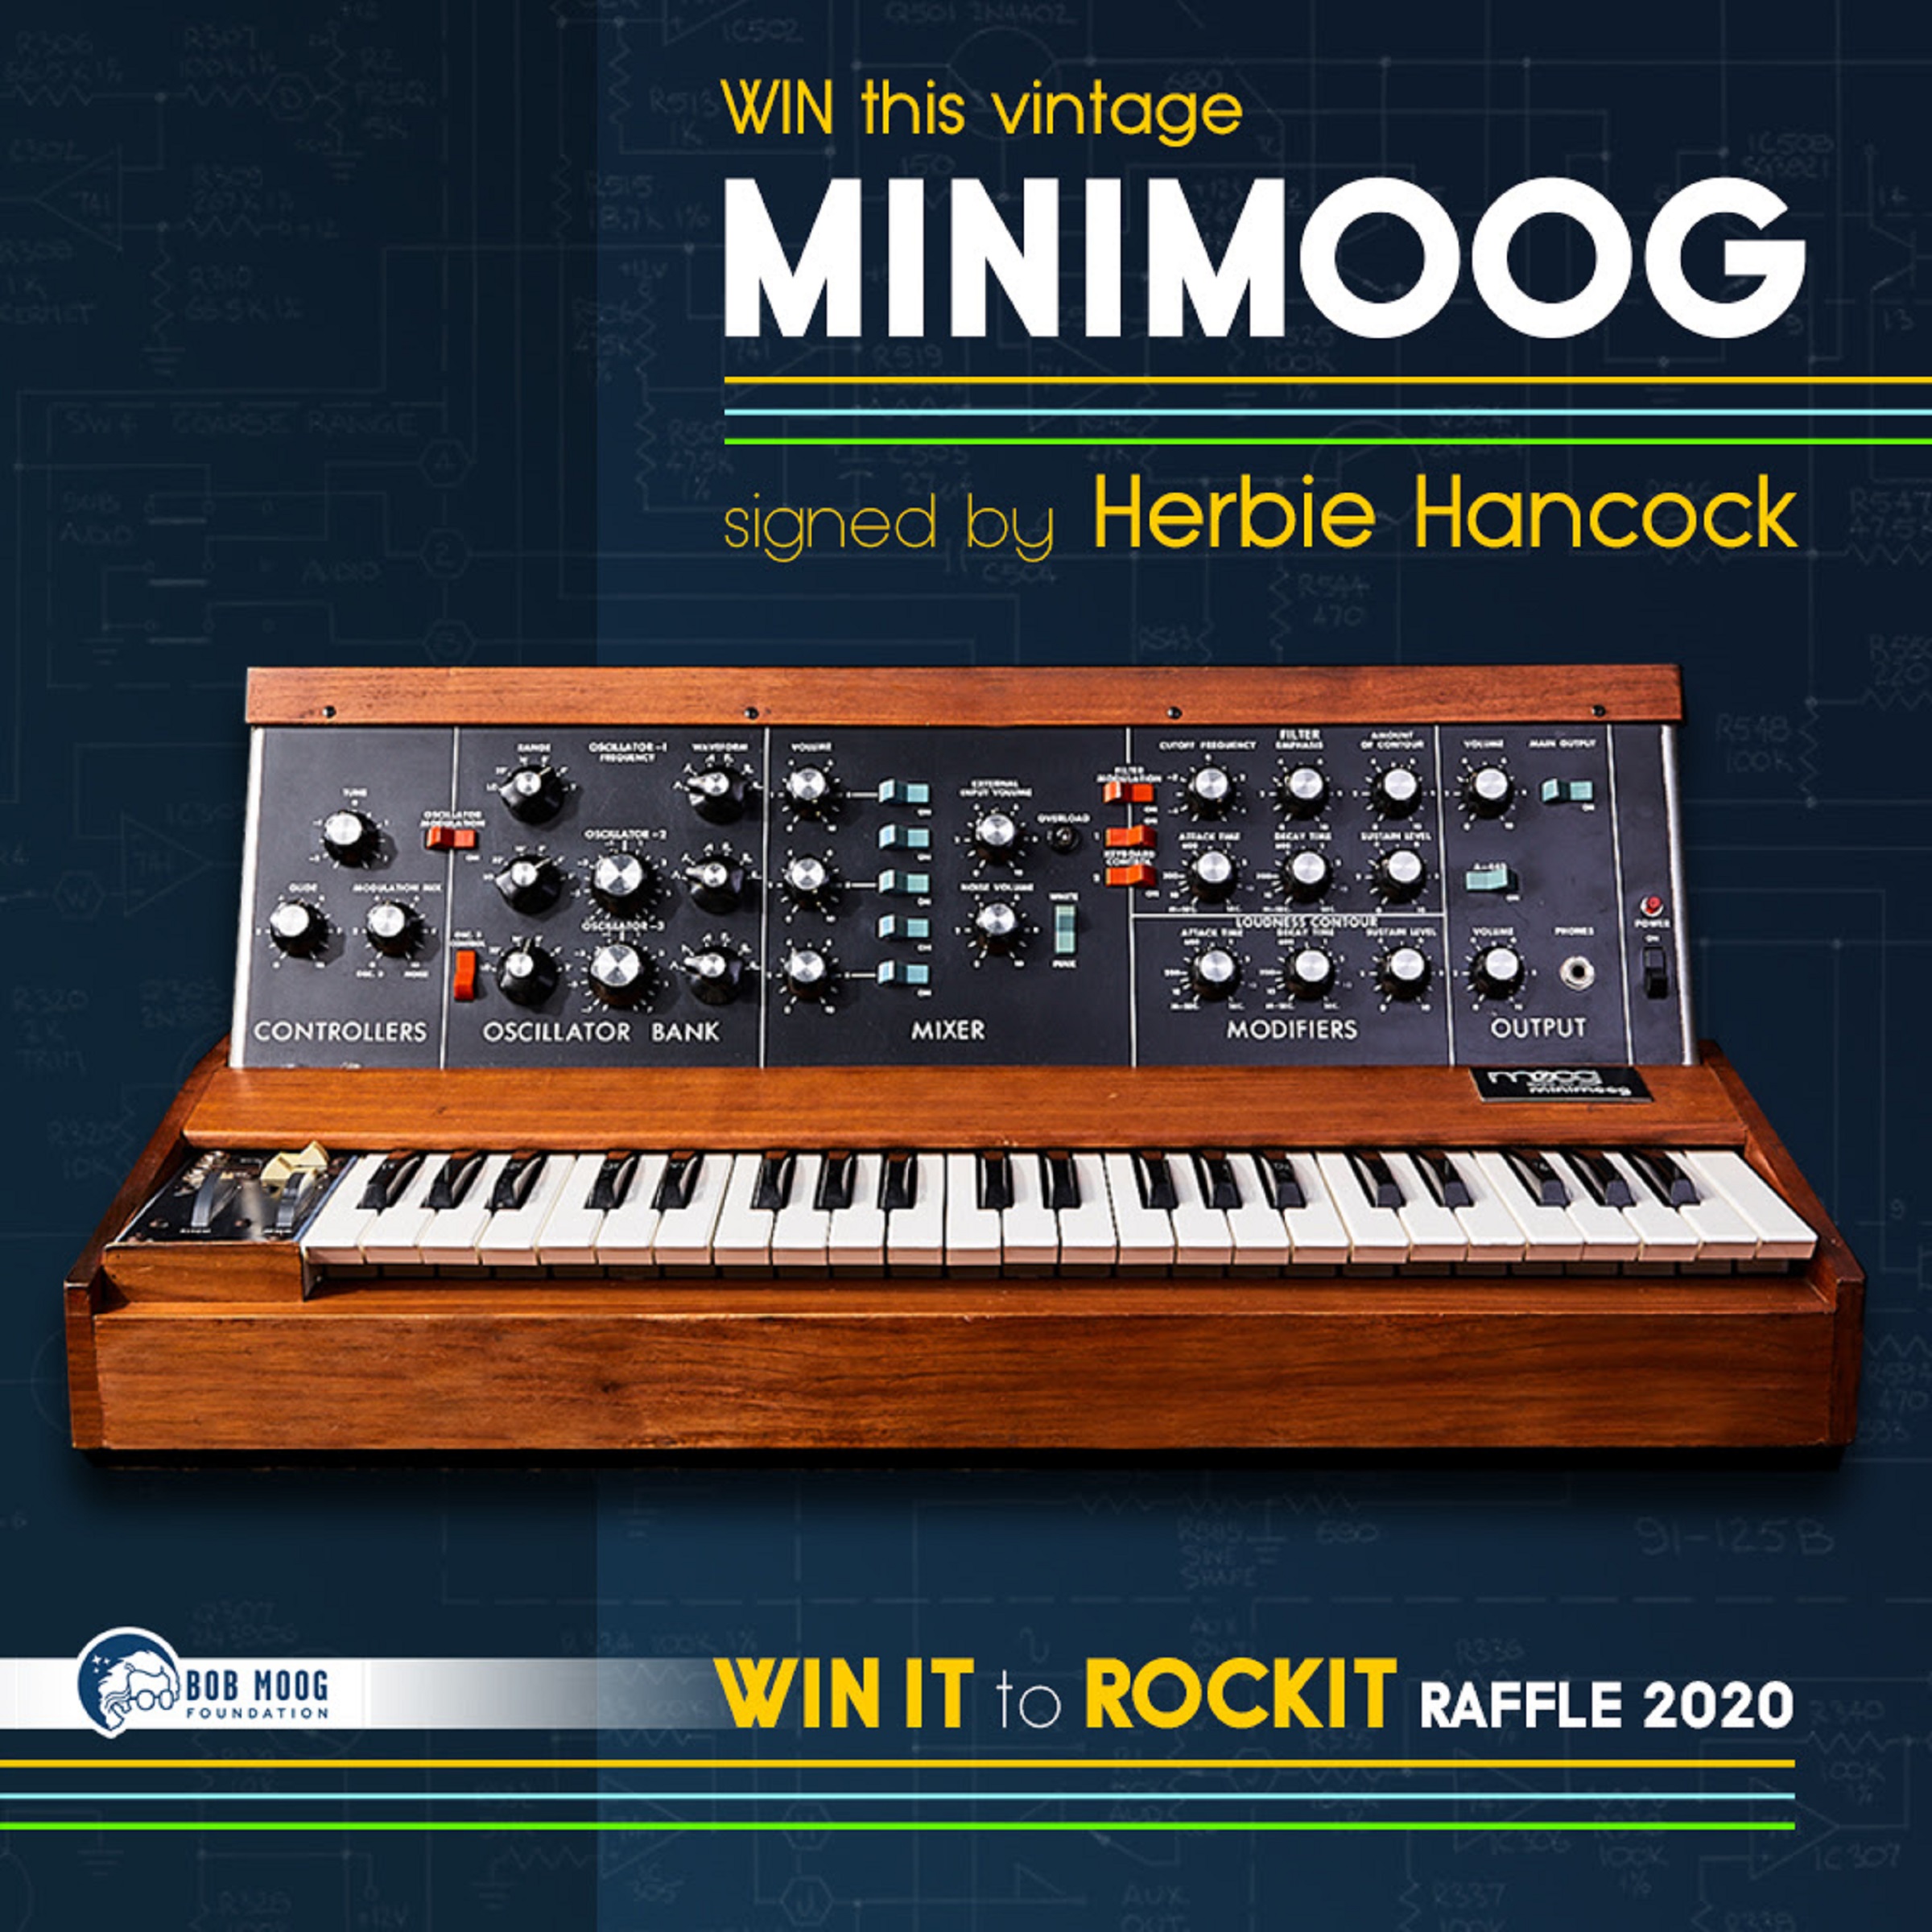 Bob Moog Foundation Announces Raffle for Vintage Minimoog Signed By Herbie Hancock